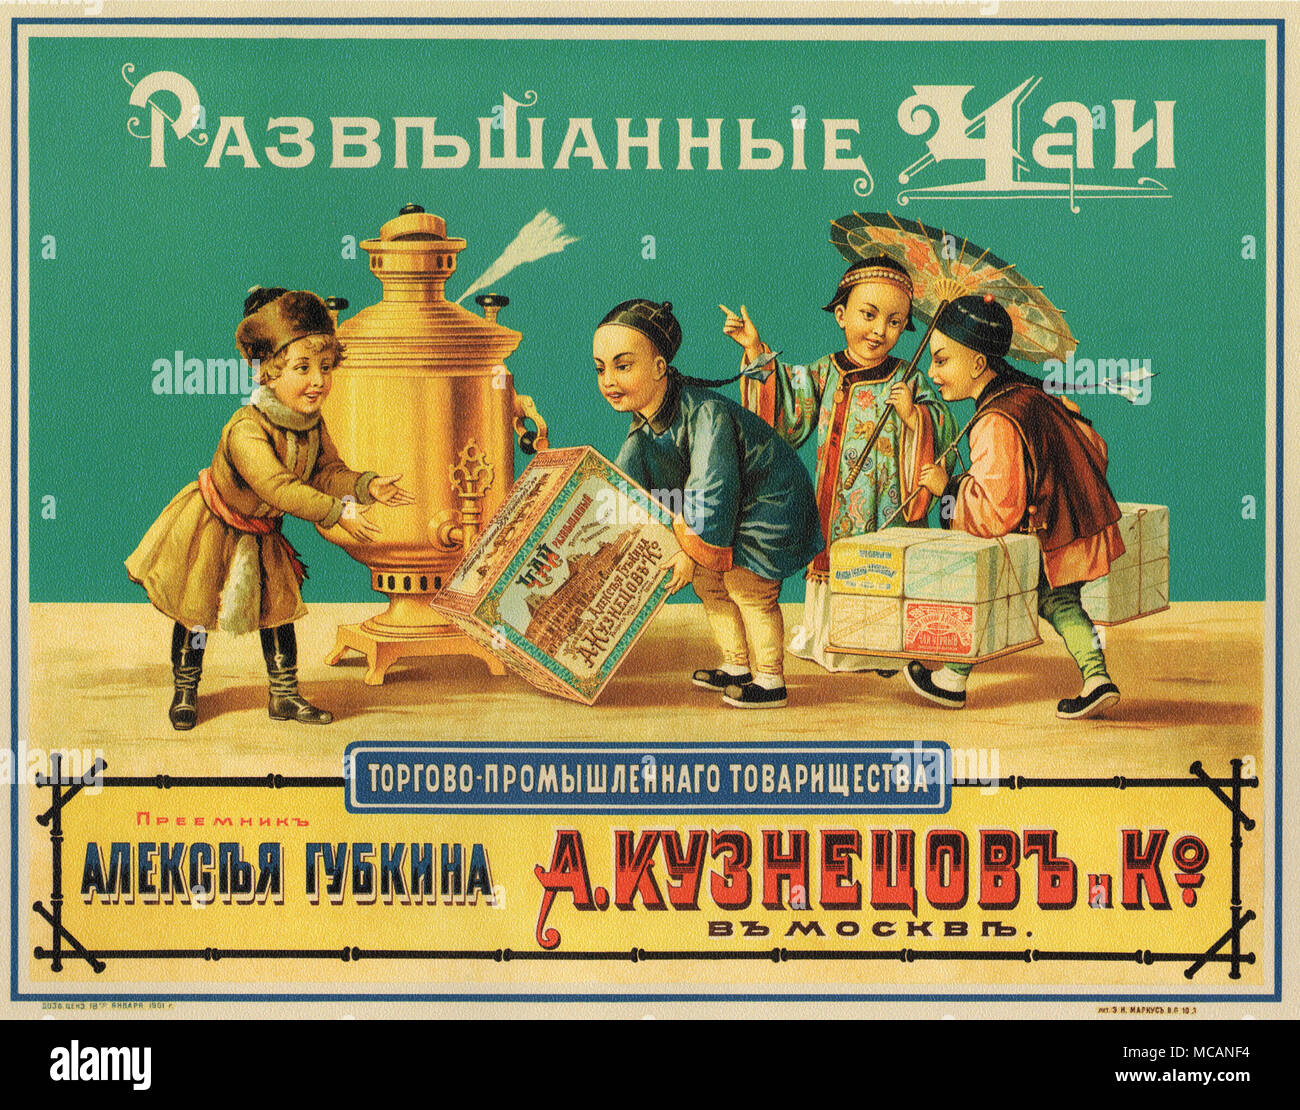 Zarina poster per l'Imperial?russo?Kuznetsov Mosca?tè società. Foto Stock